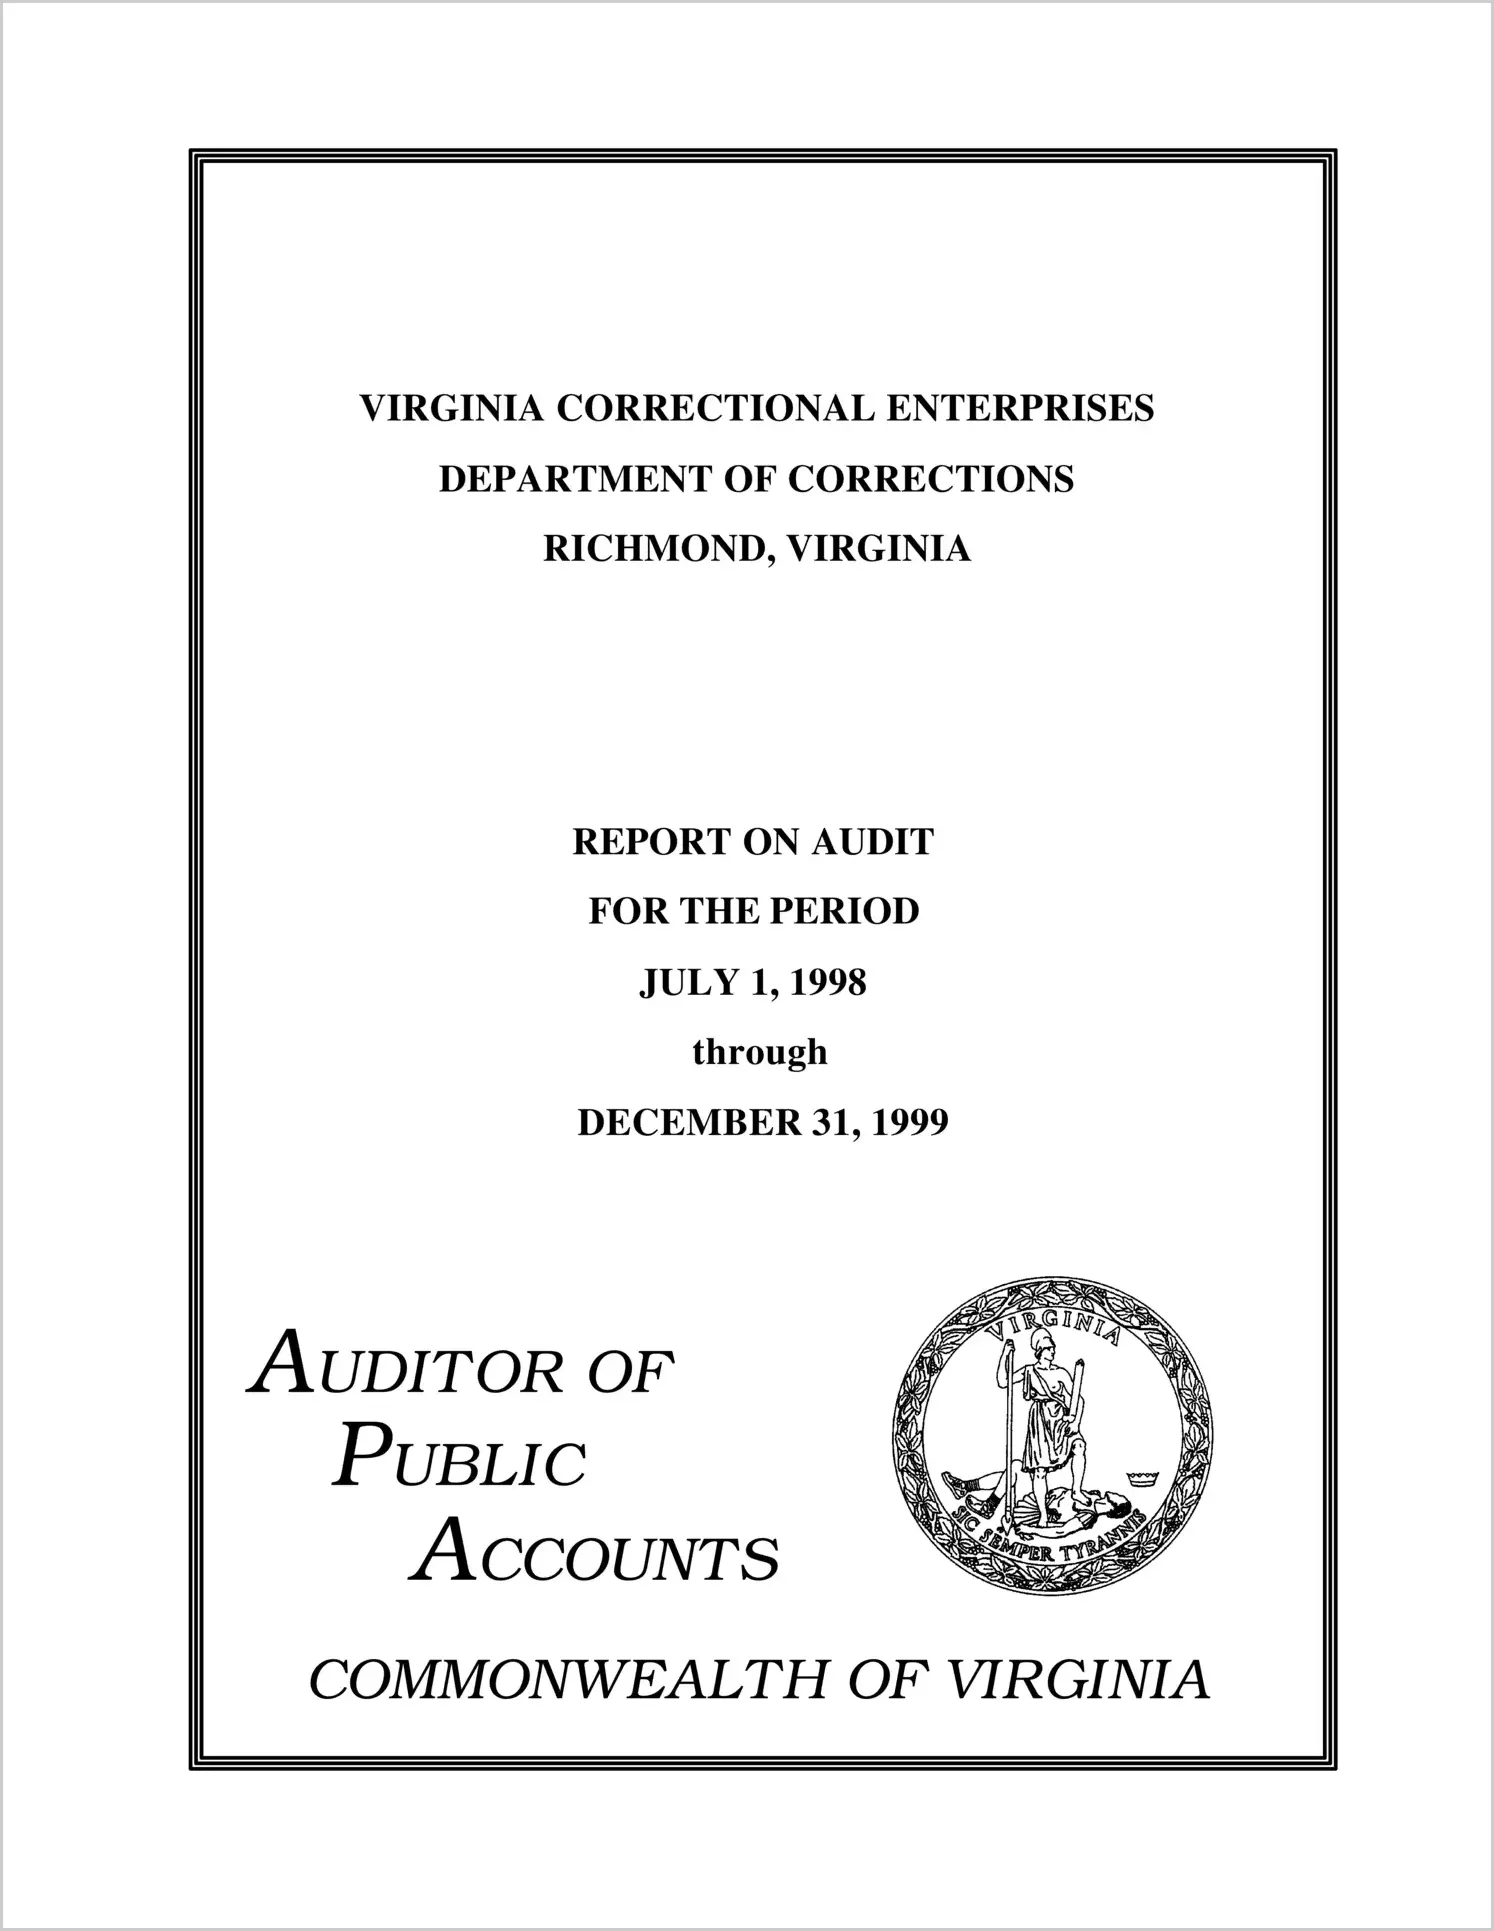 Virginia Correctional Enterprises for the period of July 1, 1998 through December 31, 1999